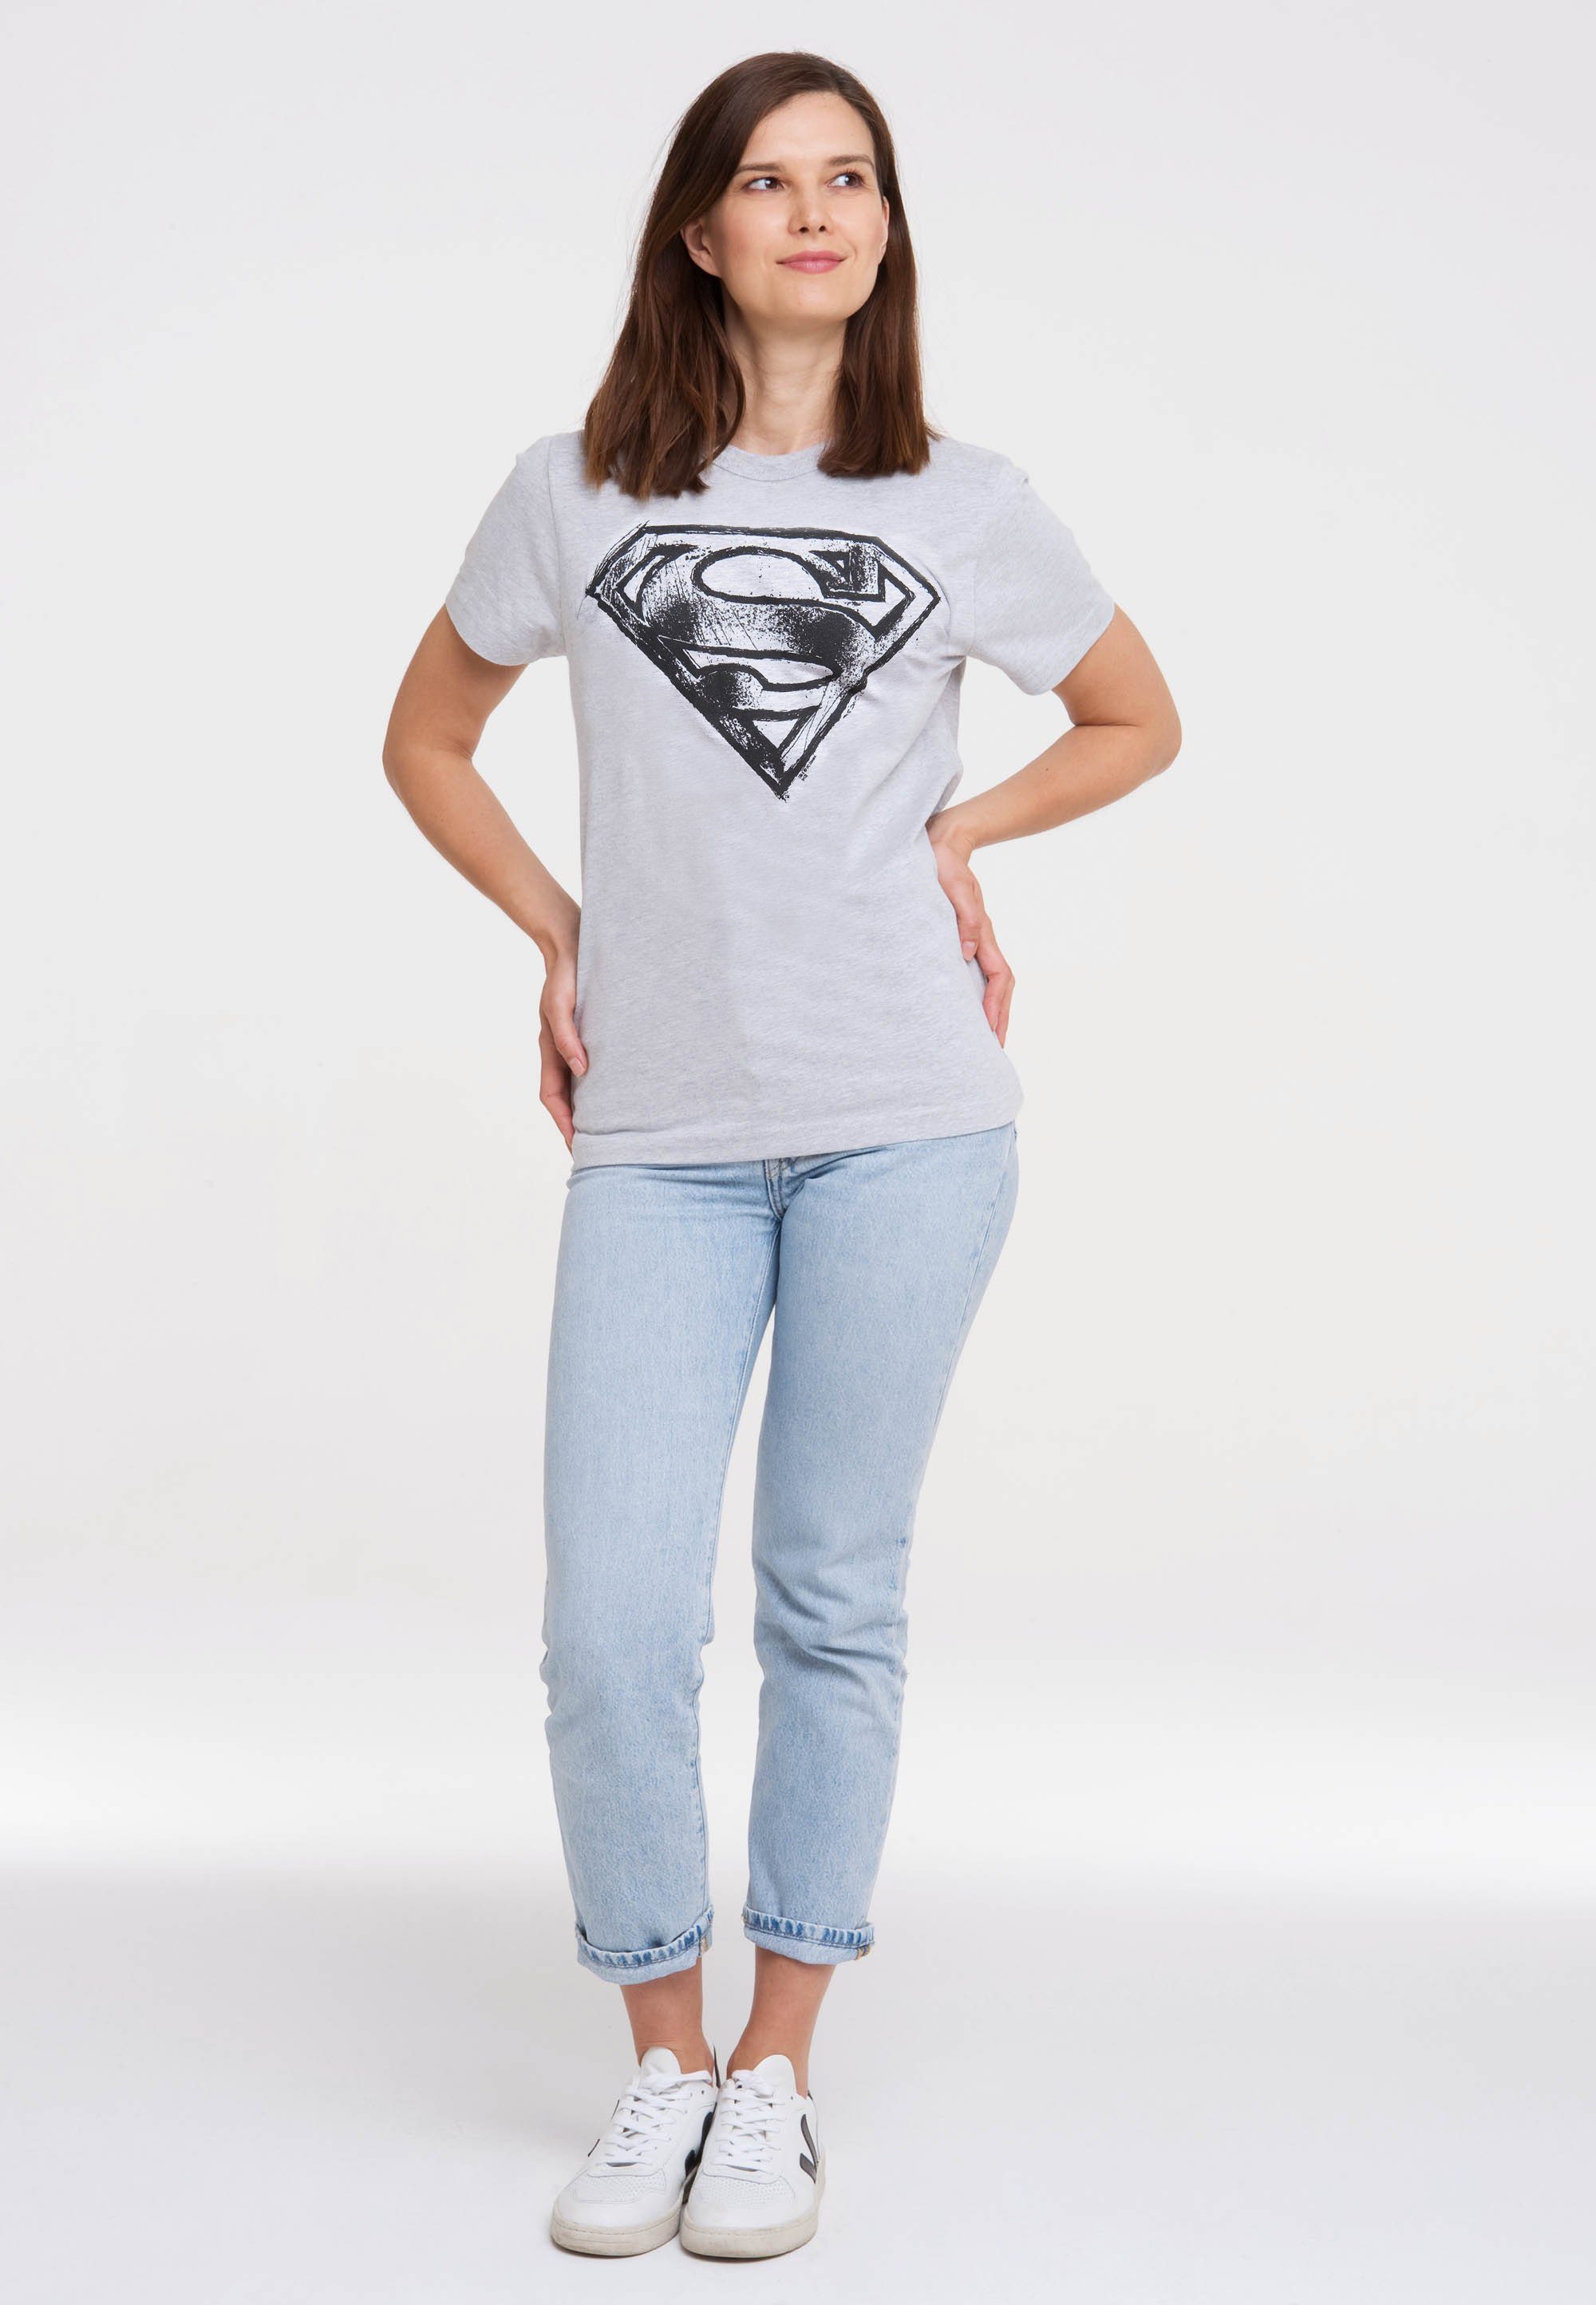 LOGOSHIRT T-Shirt Superman Superhelden-Print trendigem mit Logo Scribble